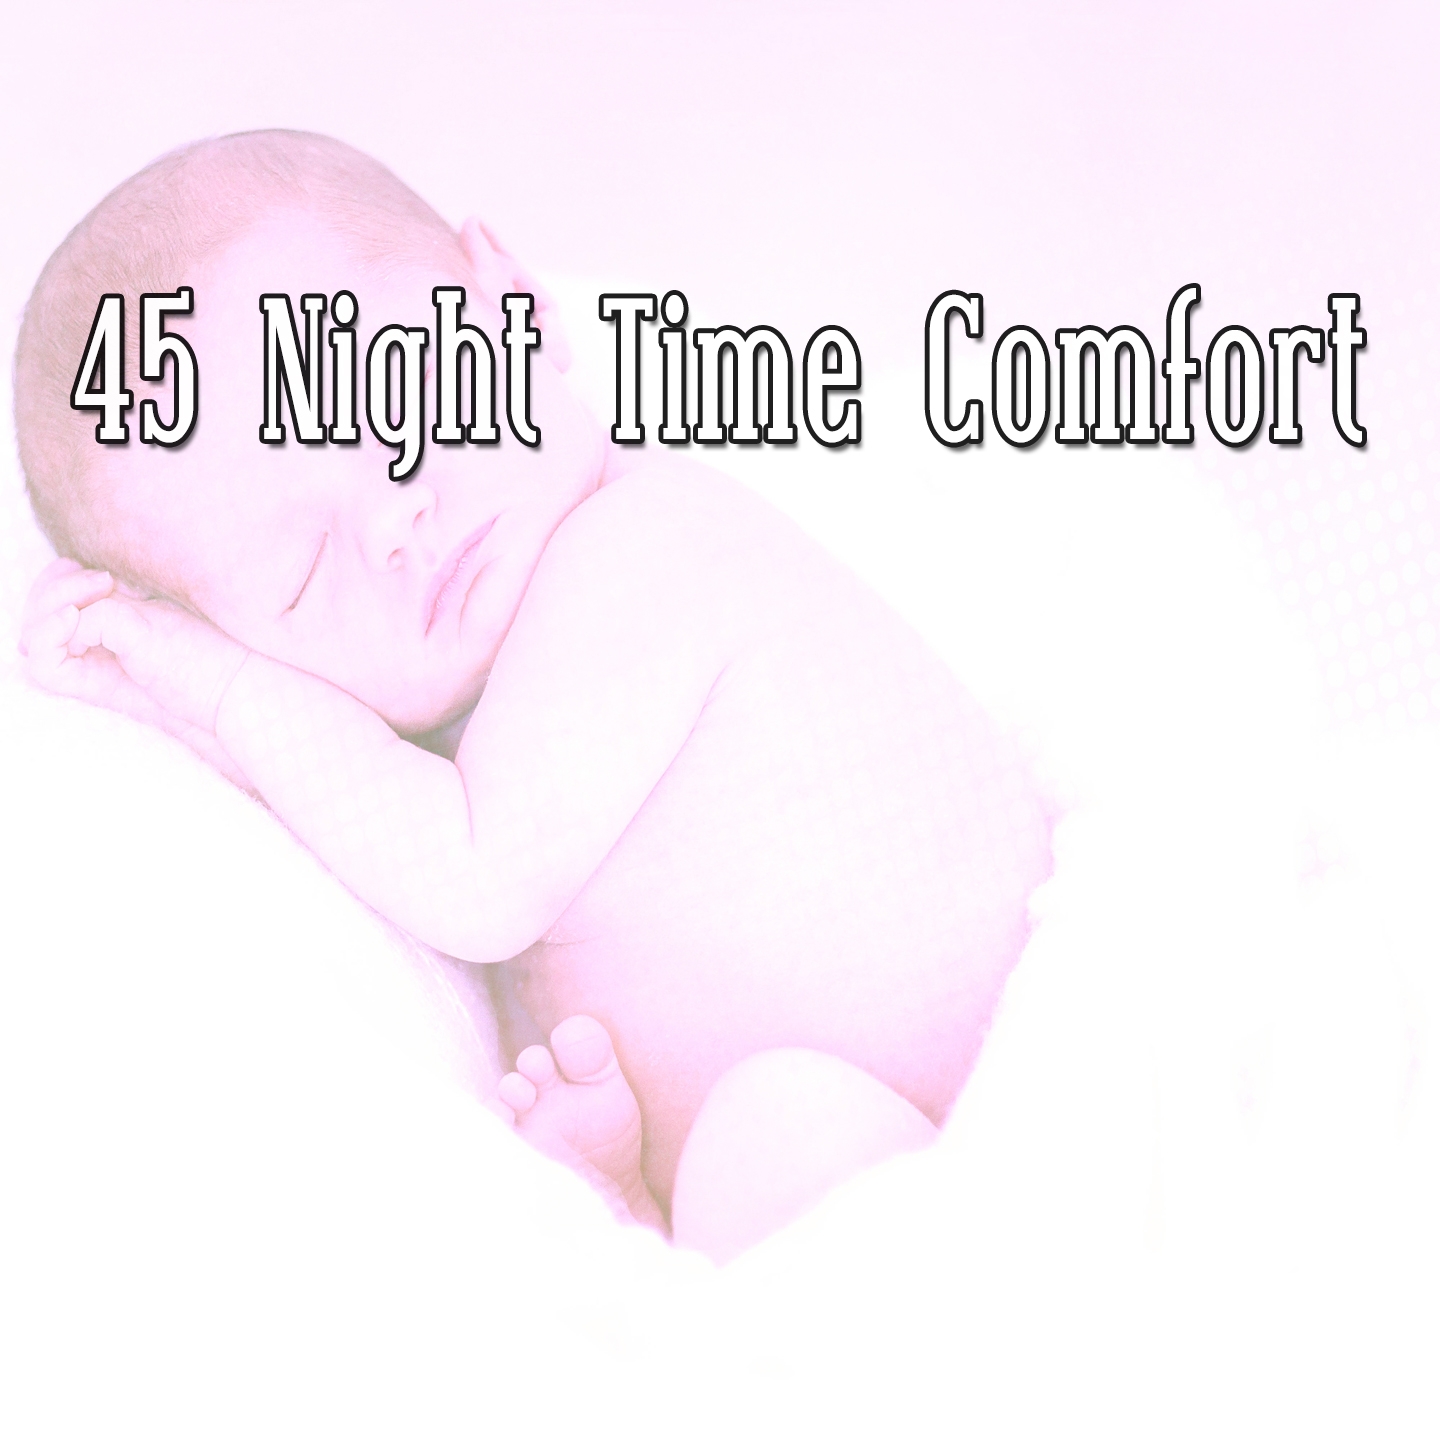 45 Night Time Comfort